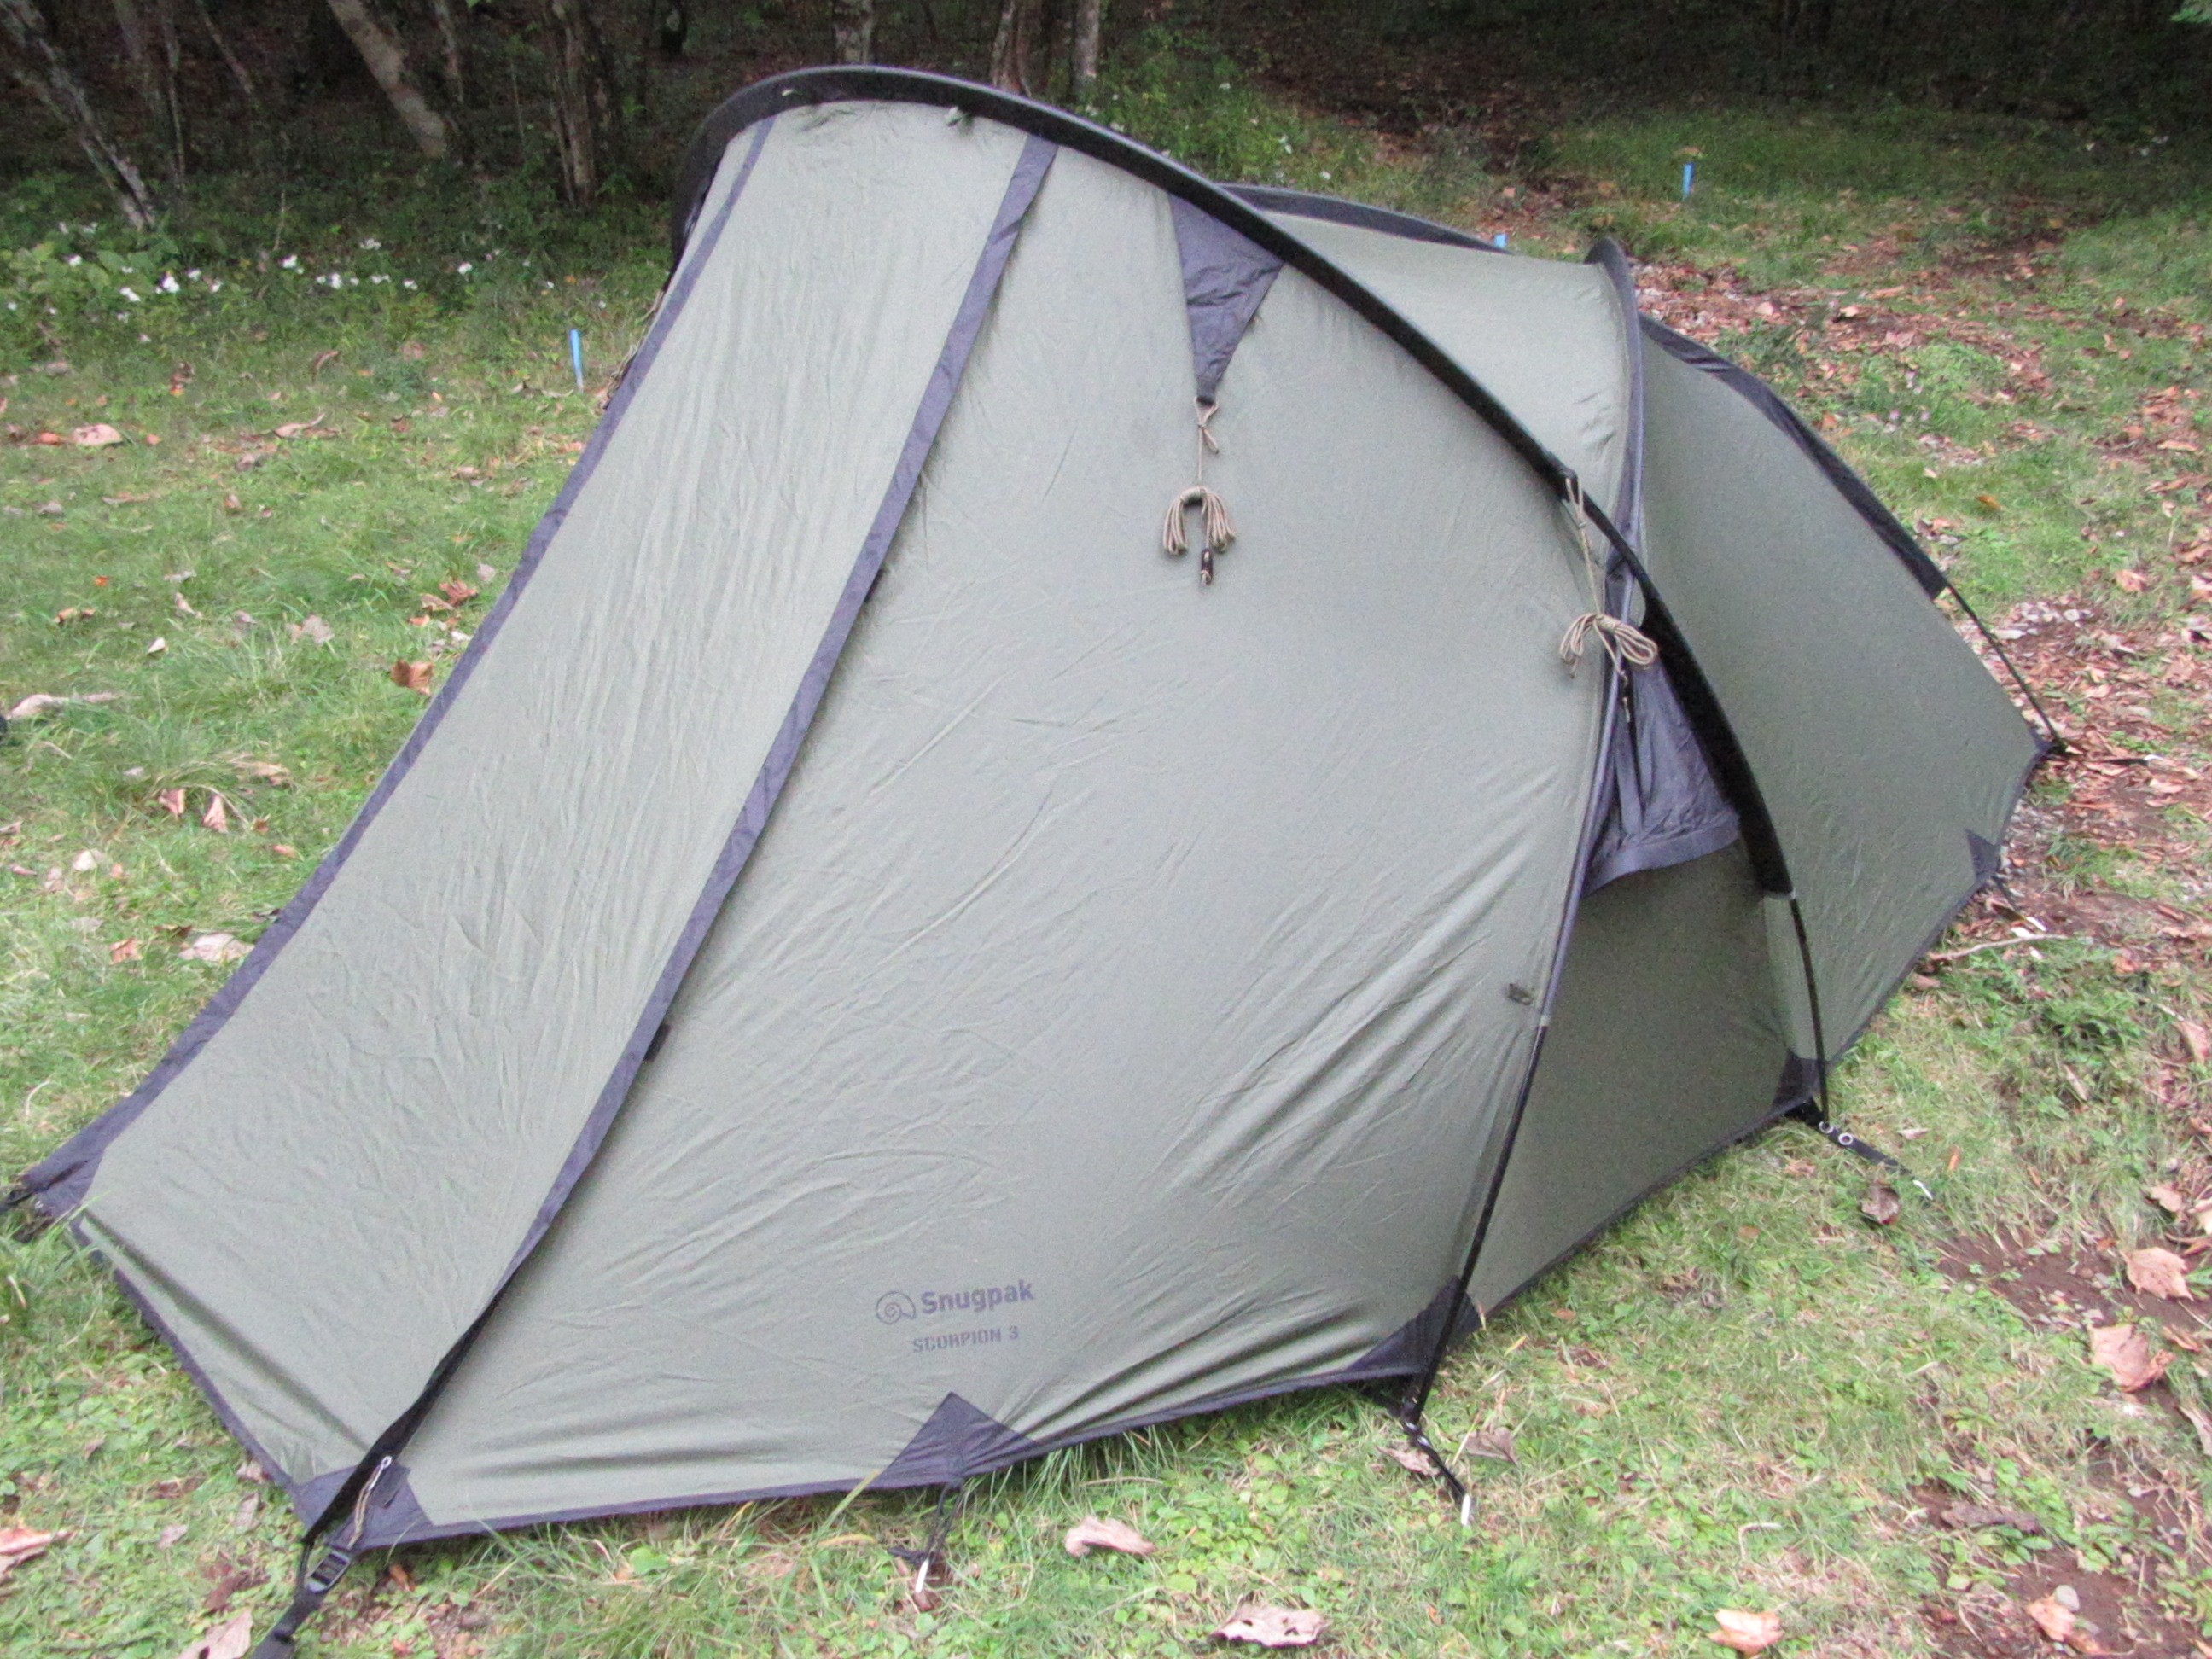 Snugpak(スナグパック) ジャーニートリオ 3人用 ドーム型テント フットプリント付属 防風 耐水圧4000 おうちキャンプ 釣り イベント - 4